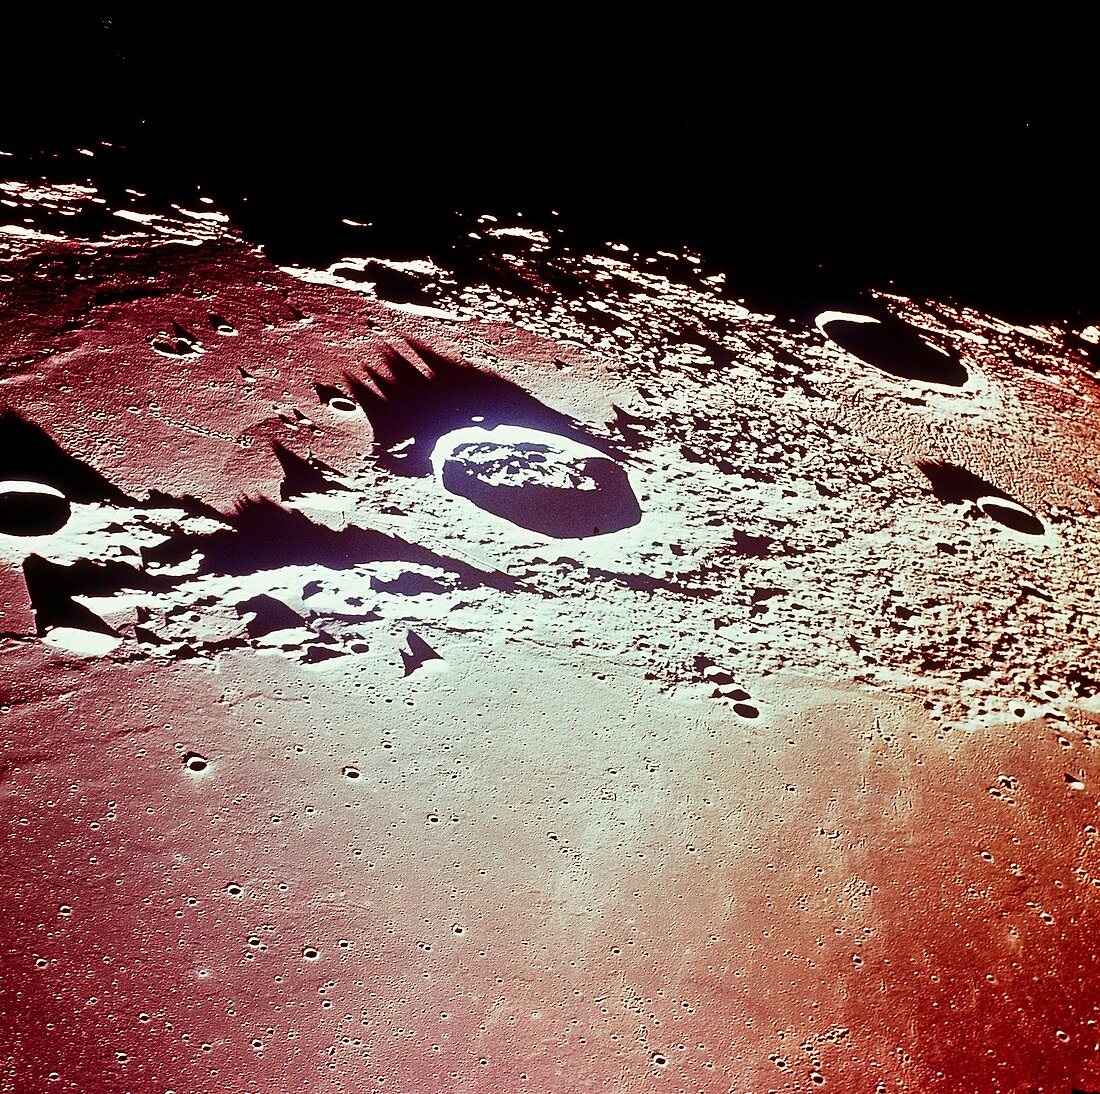 Apollo 12 photo of the lunar crater Kepler